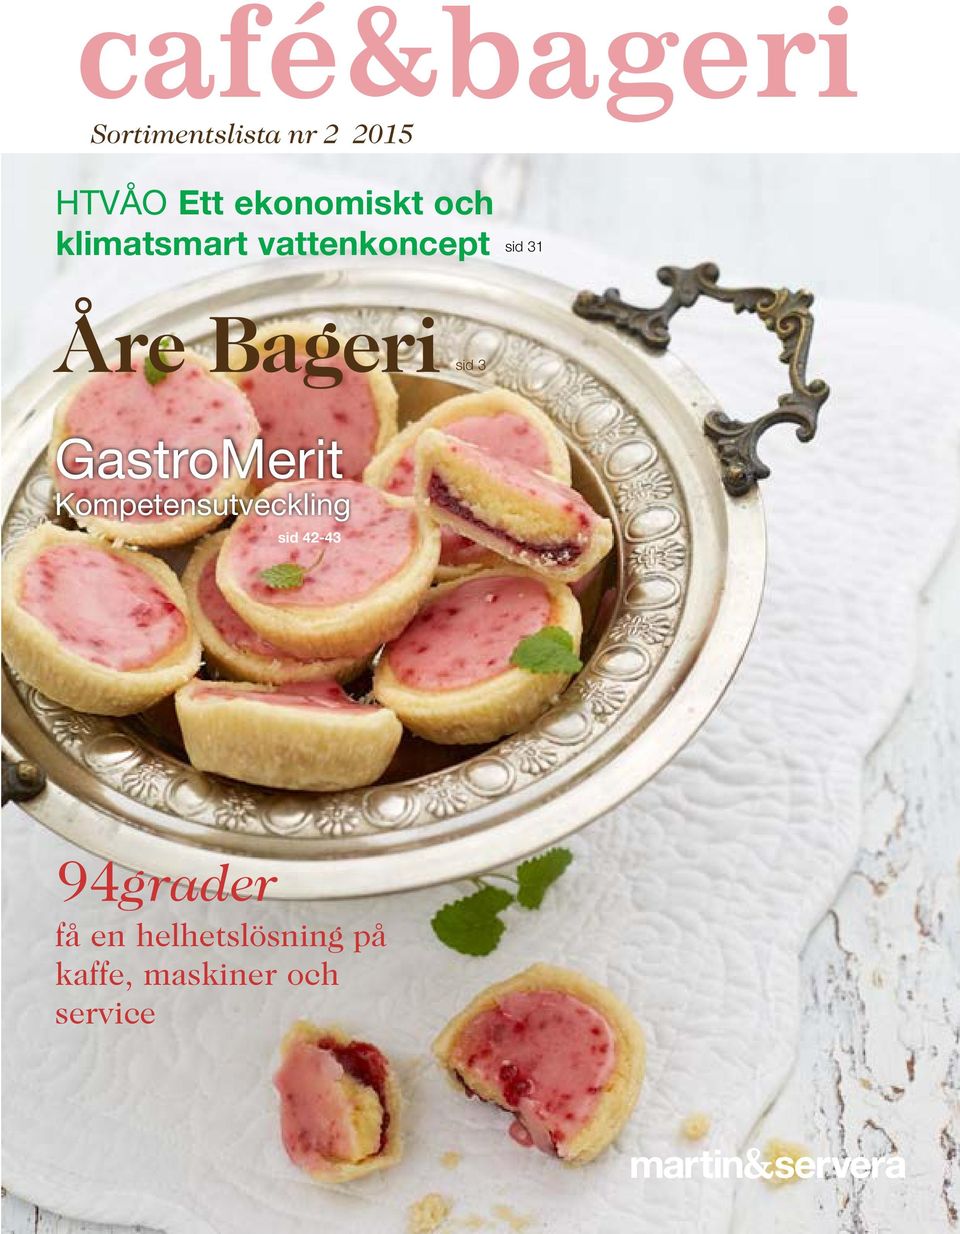 Åre Bageri sid 3 GastroMerit Kompetensutveckling sid